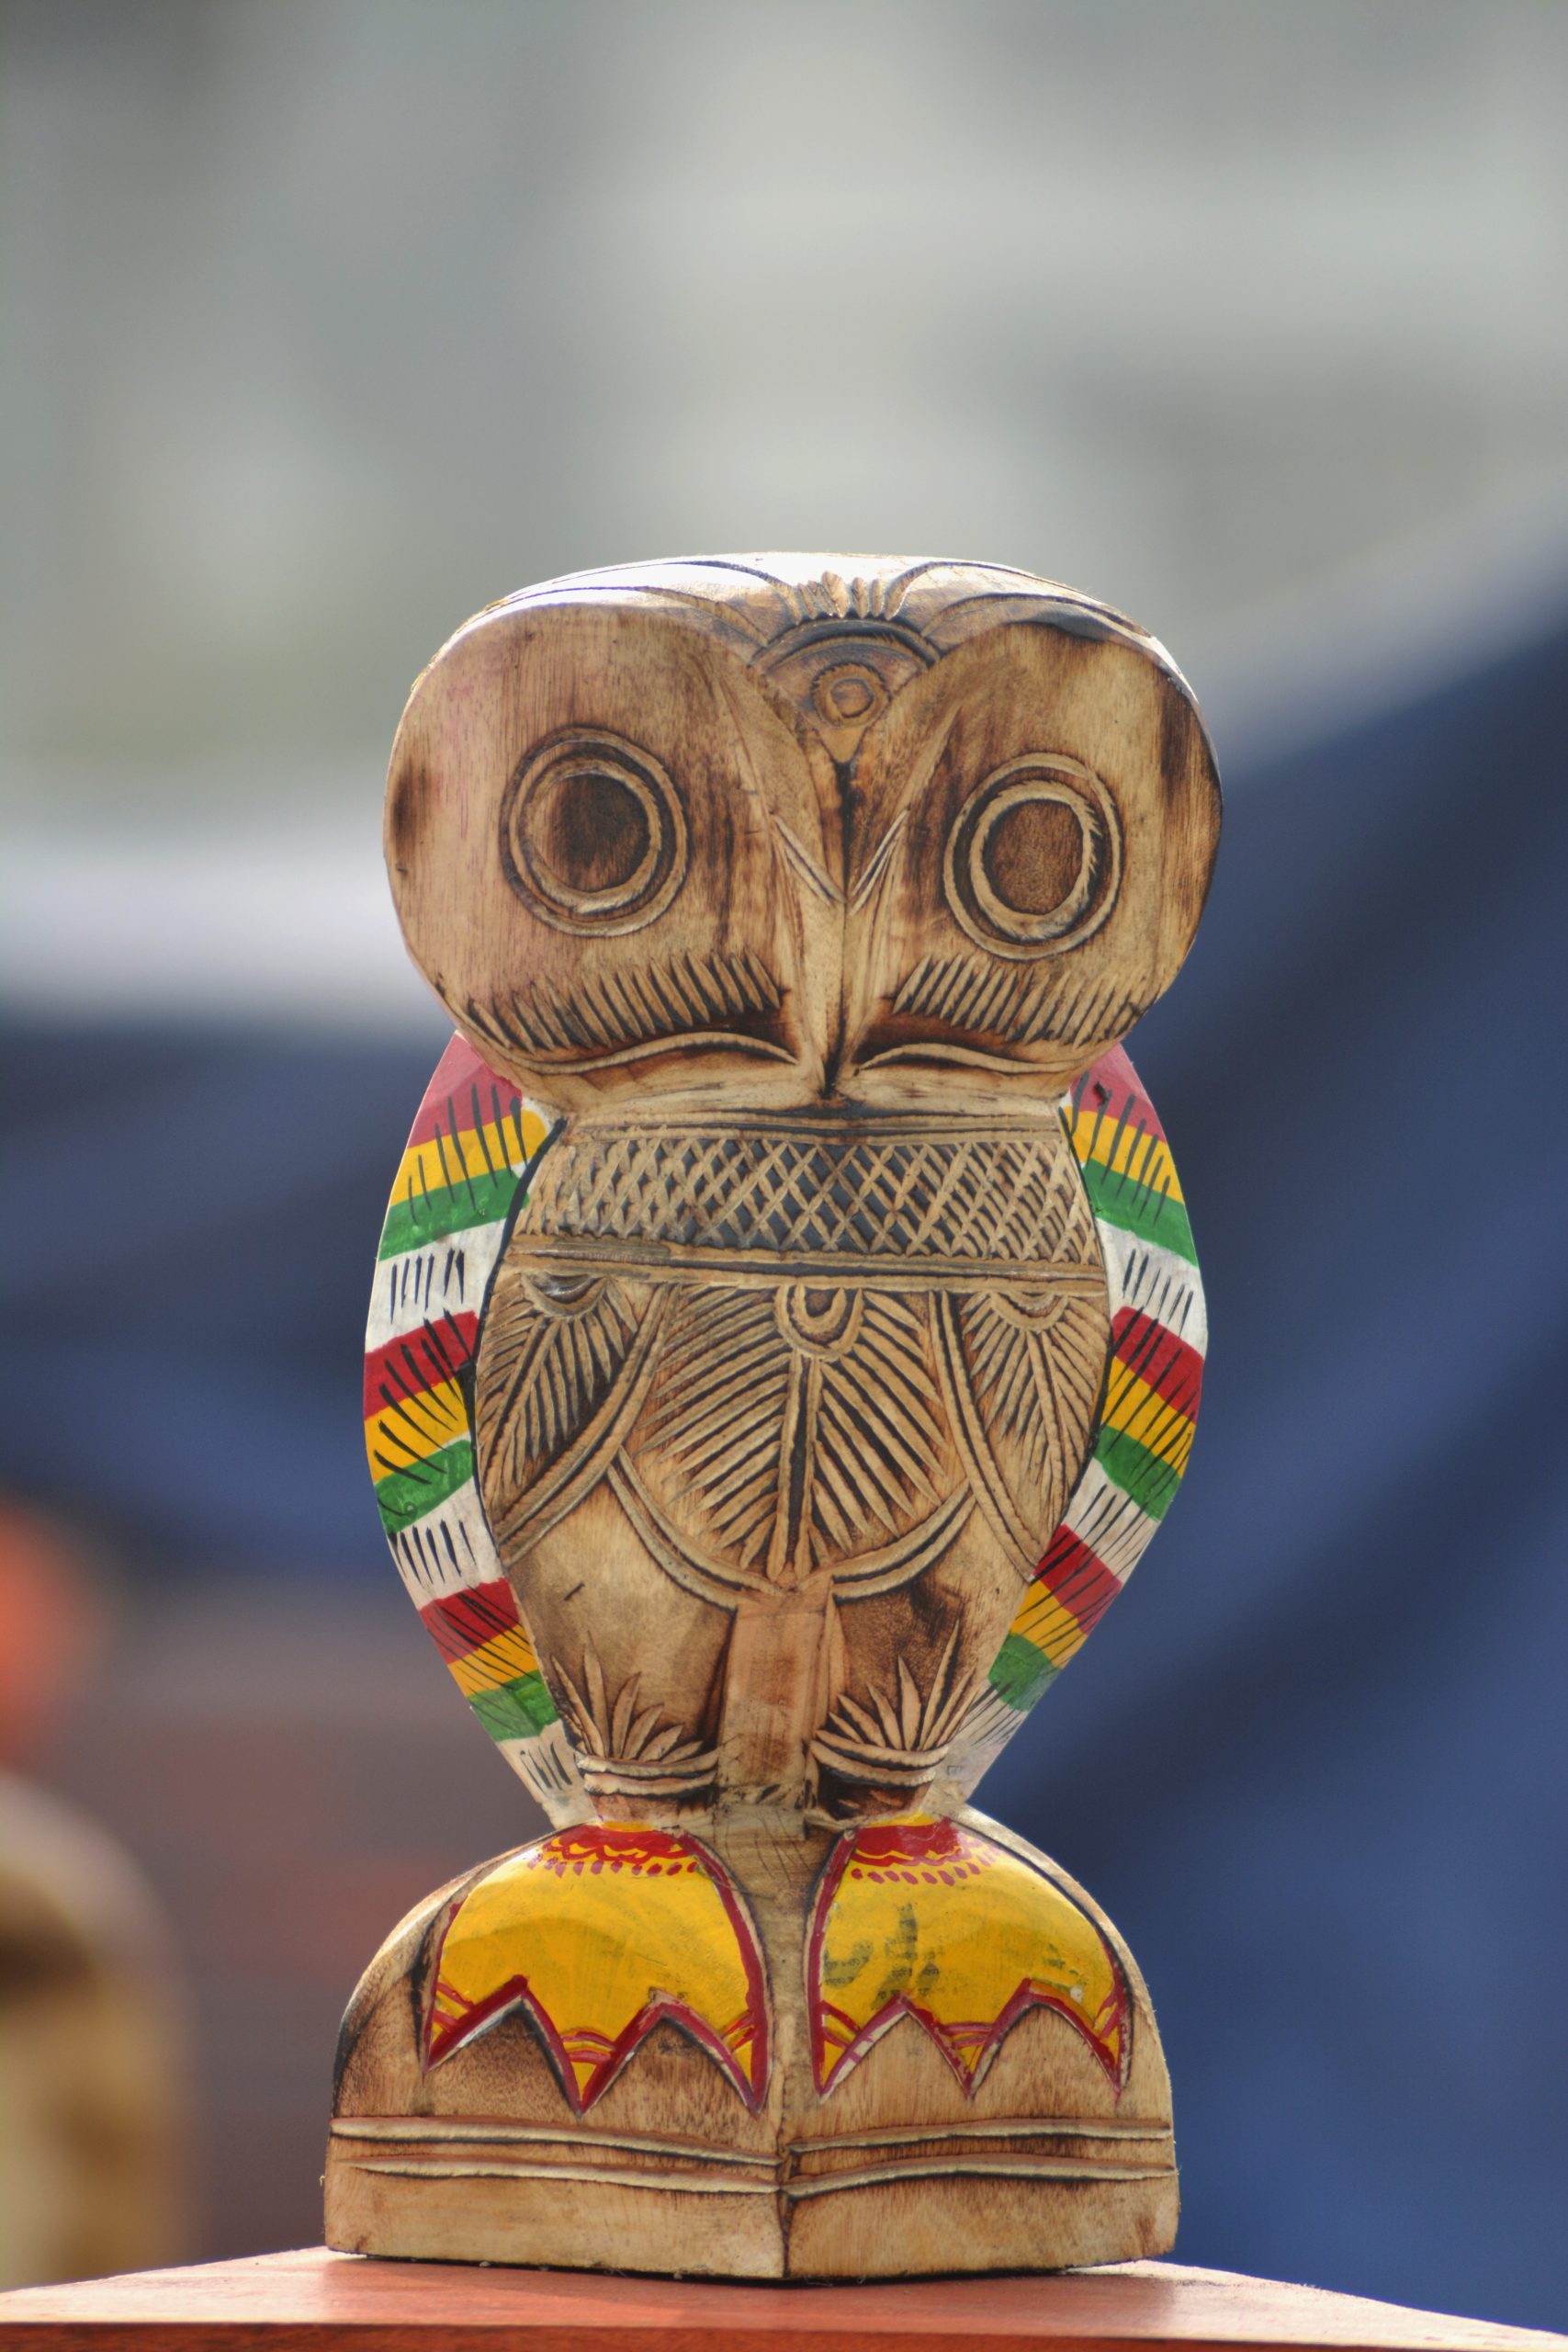 A wooden owl